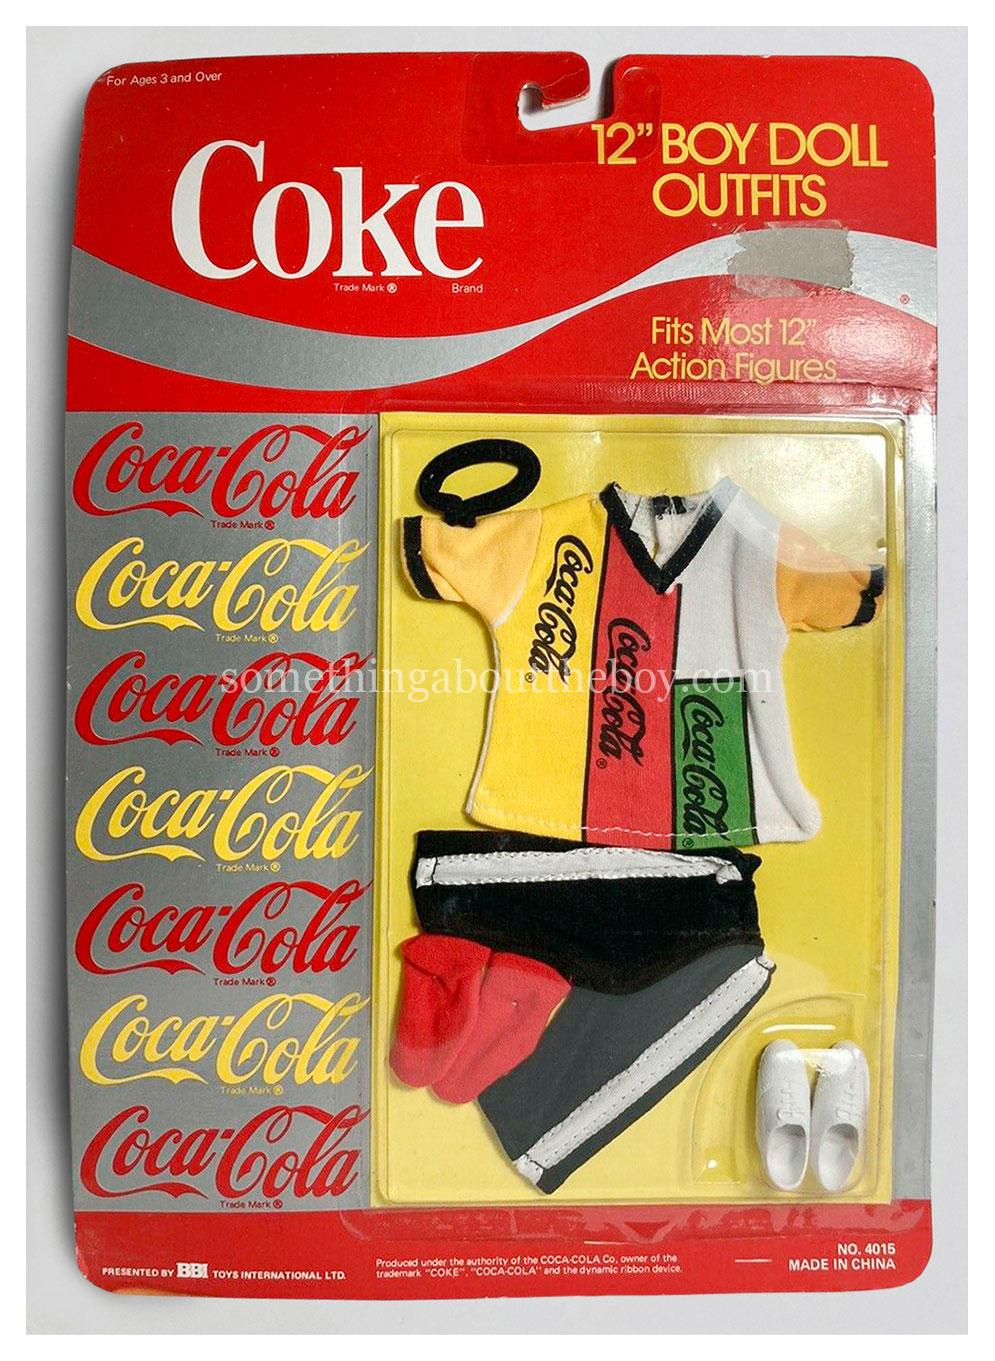 Coke Outfit by BBI Toys International Ltd